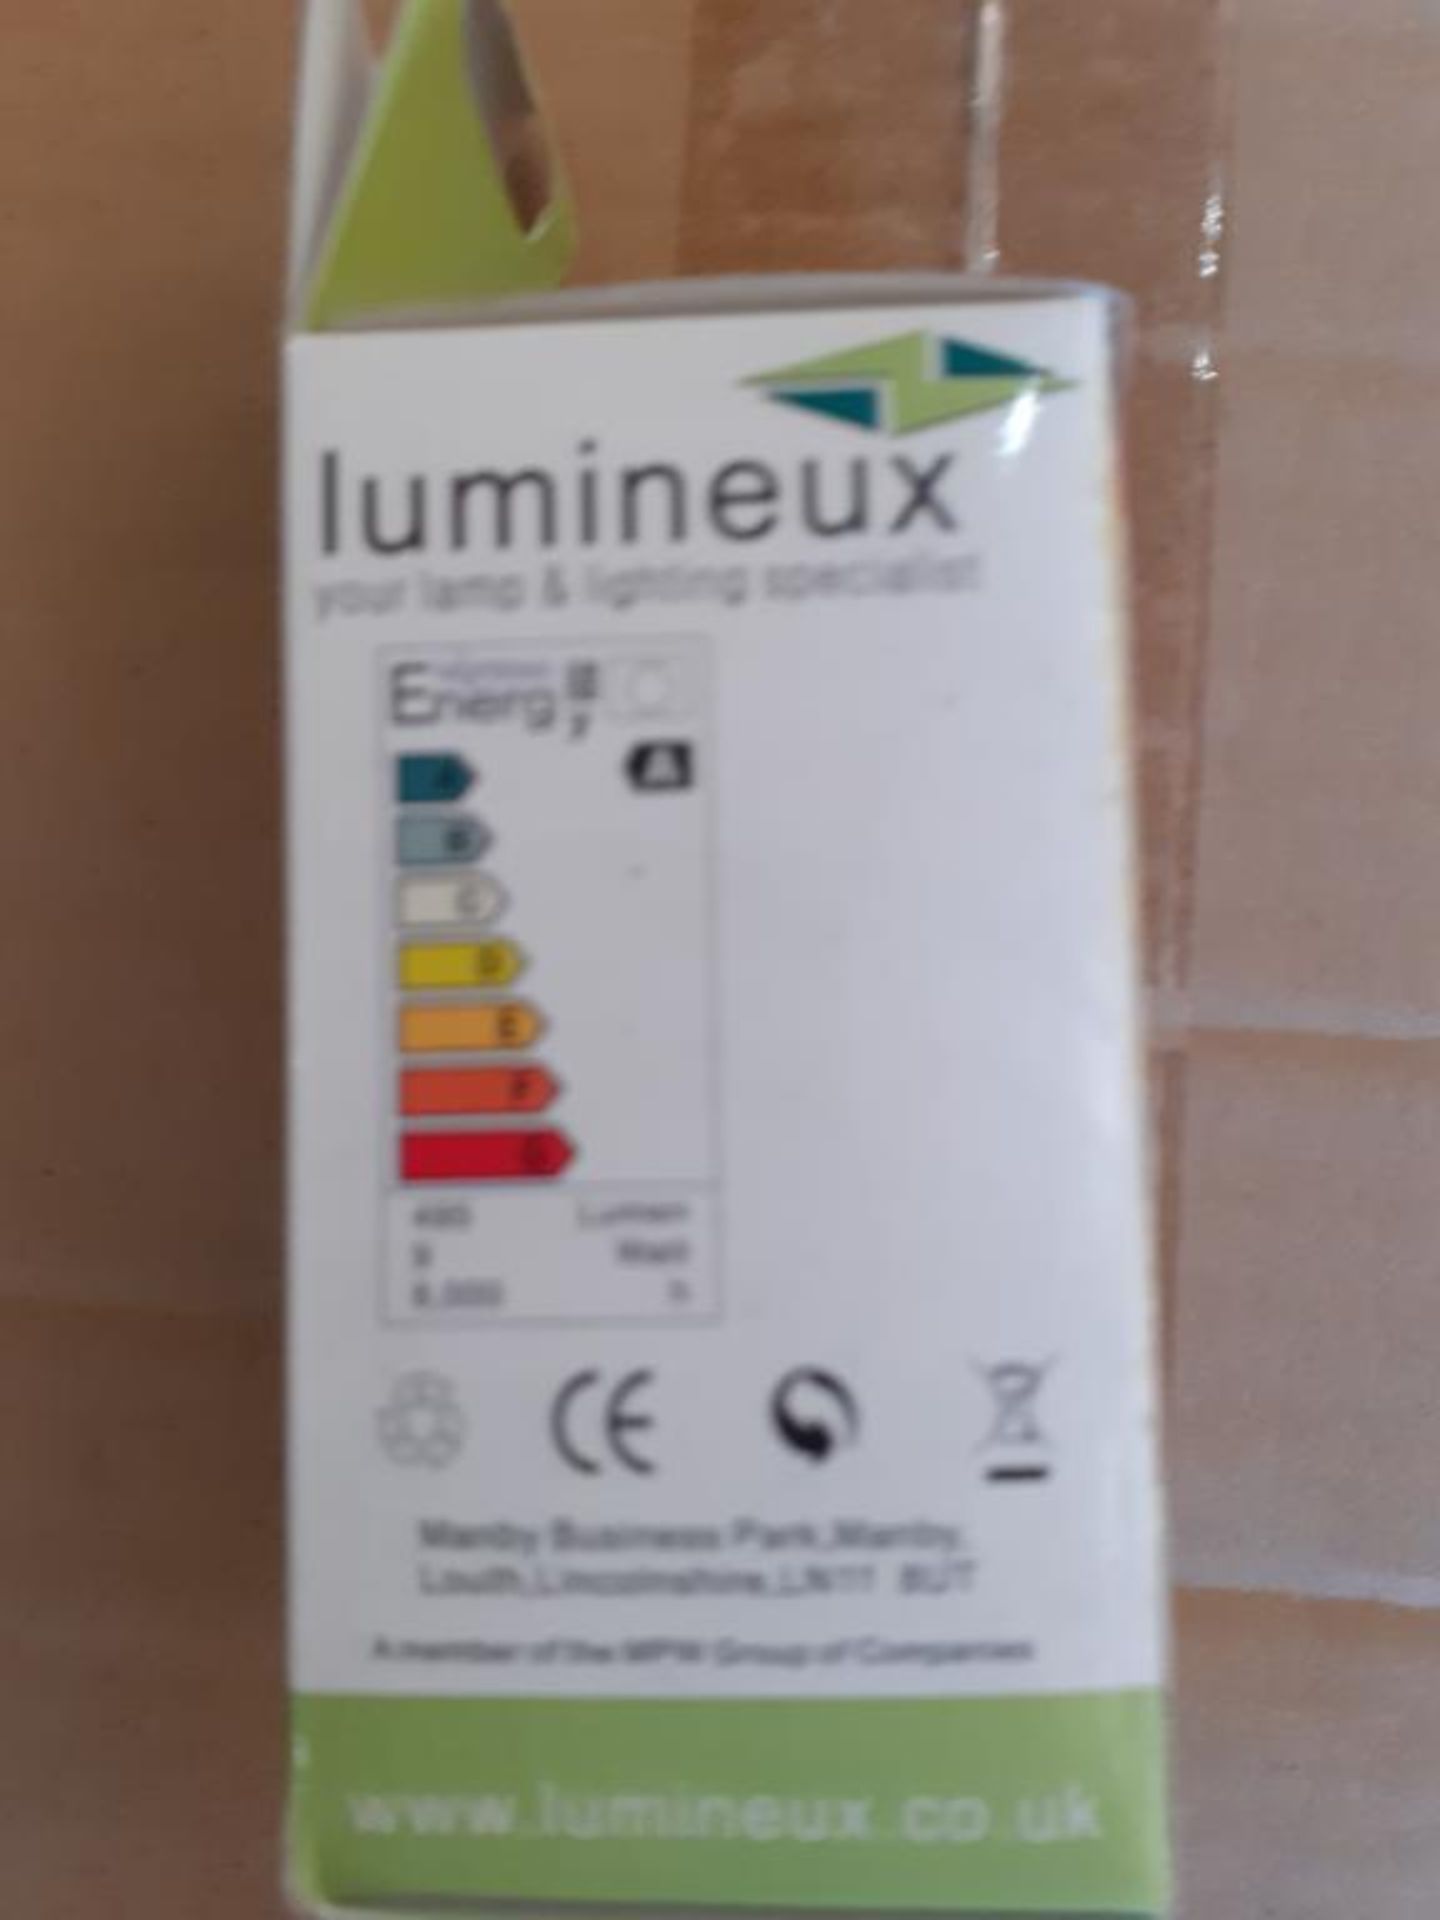 4x boxes of Lumineux Golf Ball CFL 9W E27 2700K Warm White Bulbs (100pcs per box, 1 box contains app - Image 5 of 6